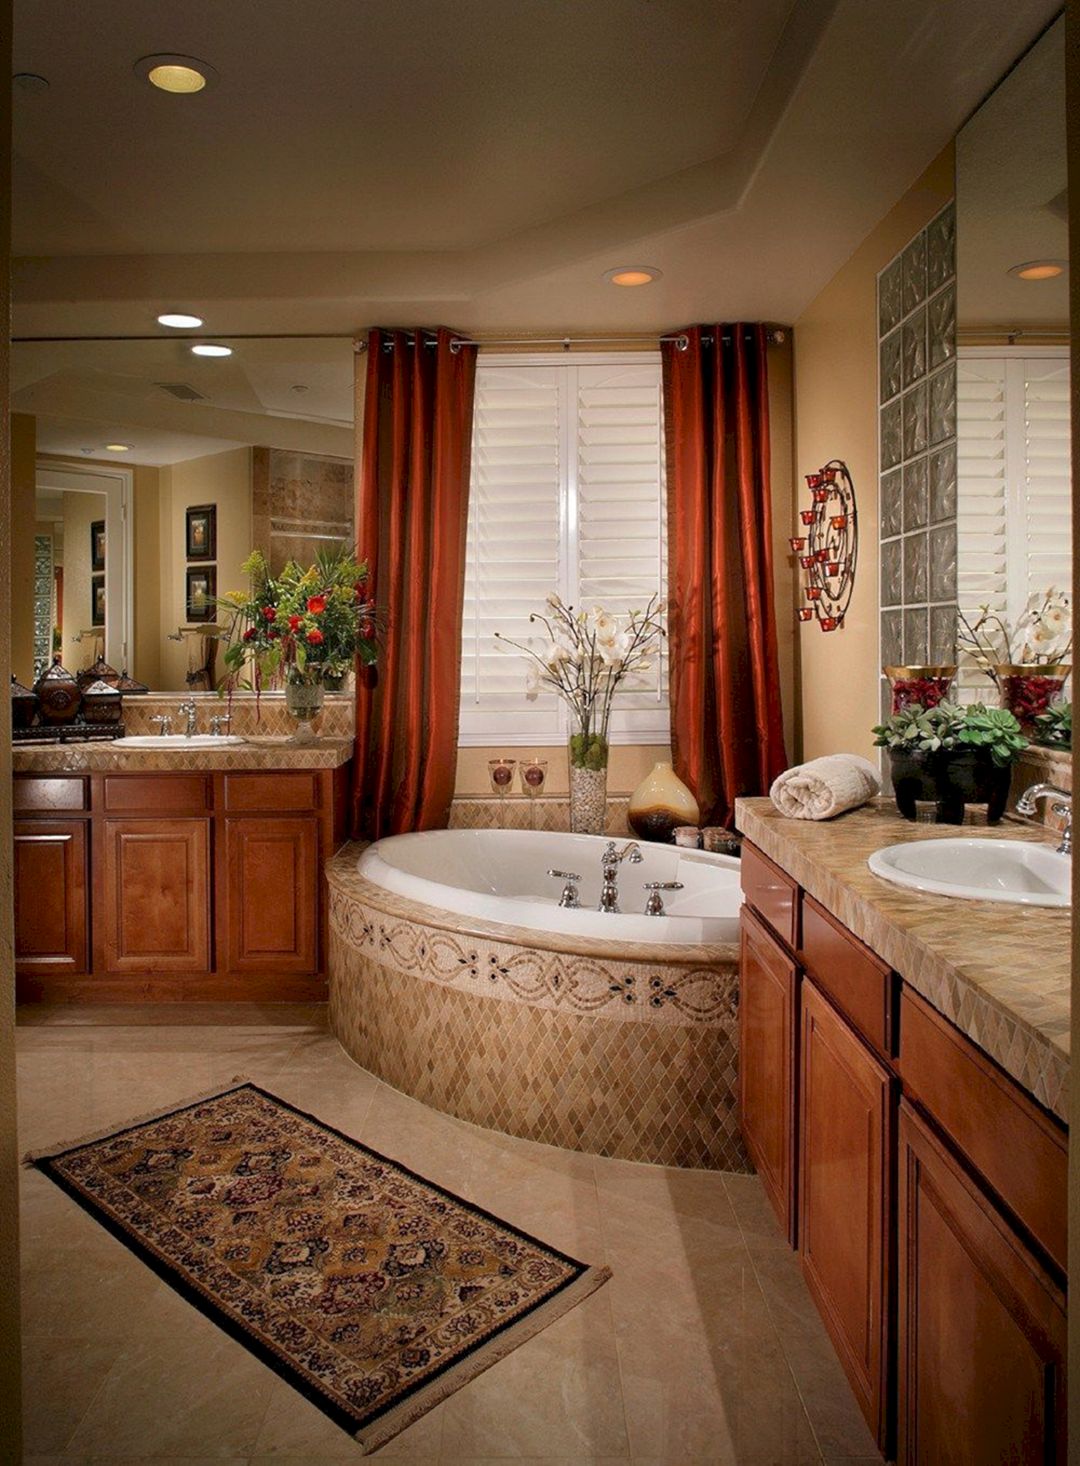 Bathroom Interior Design From Stunningexpressions